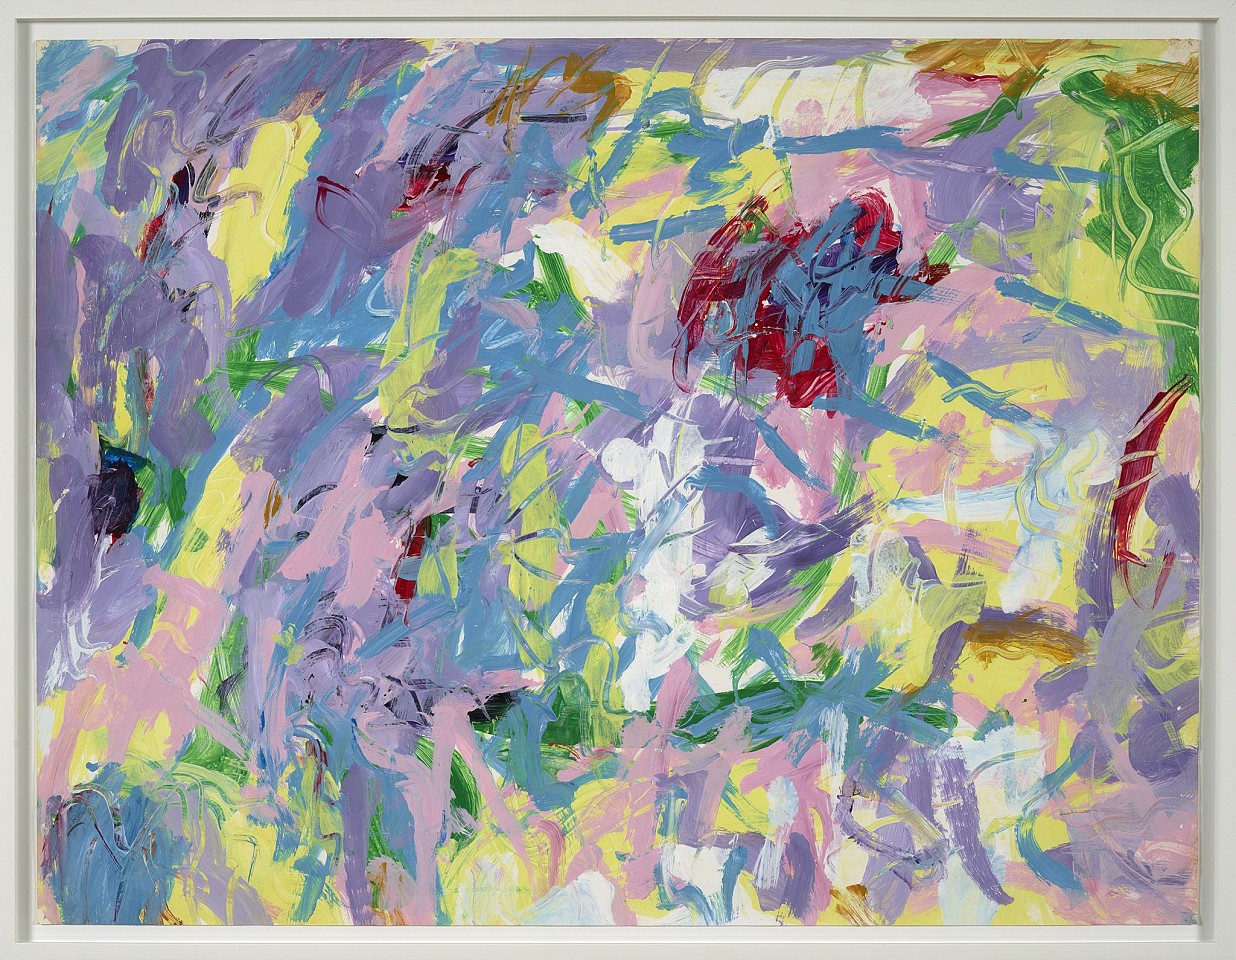 Rochelle Caper, Untitled, c.1995
Oil on paper, 35 x 46 in. (88.9 x 116.8 cm)
RCAP-00001